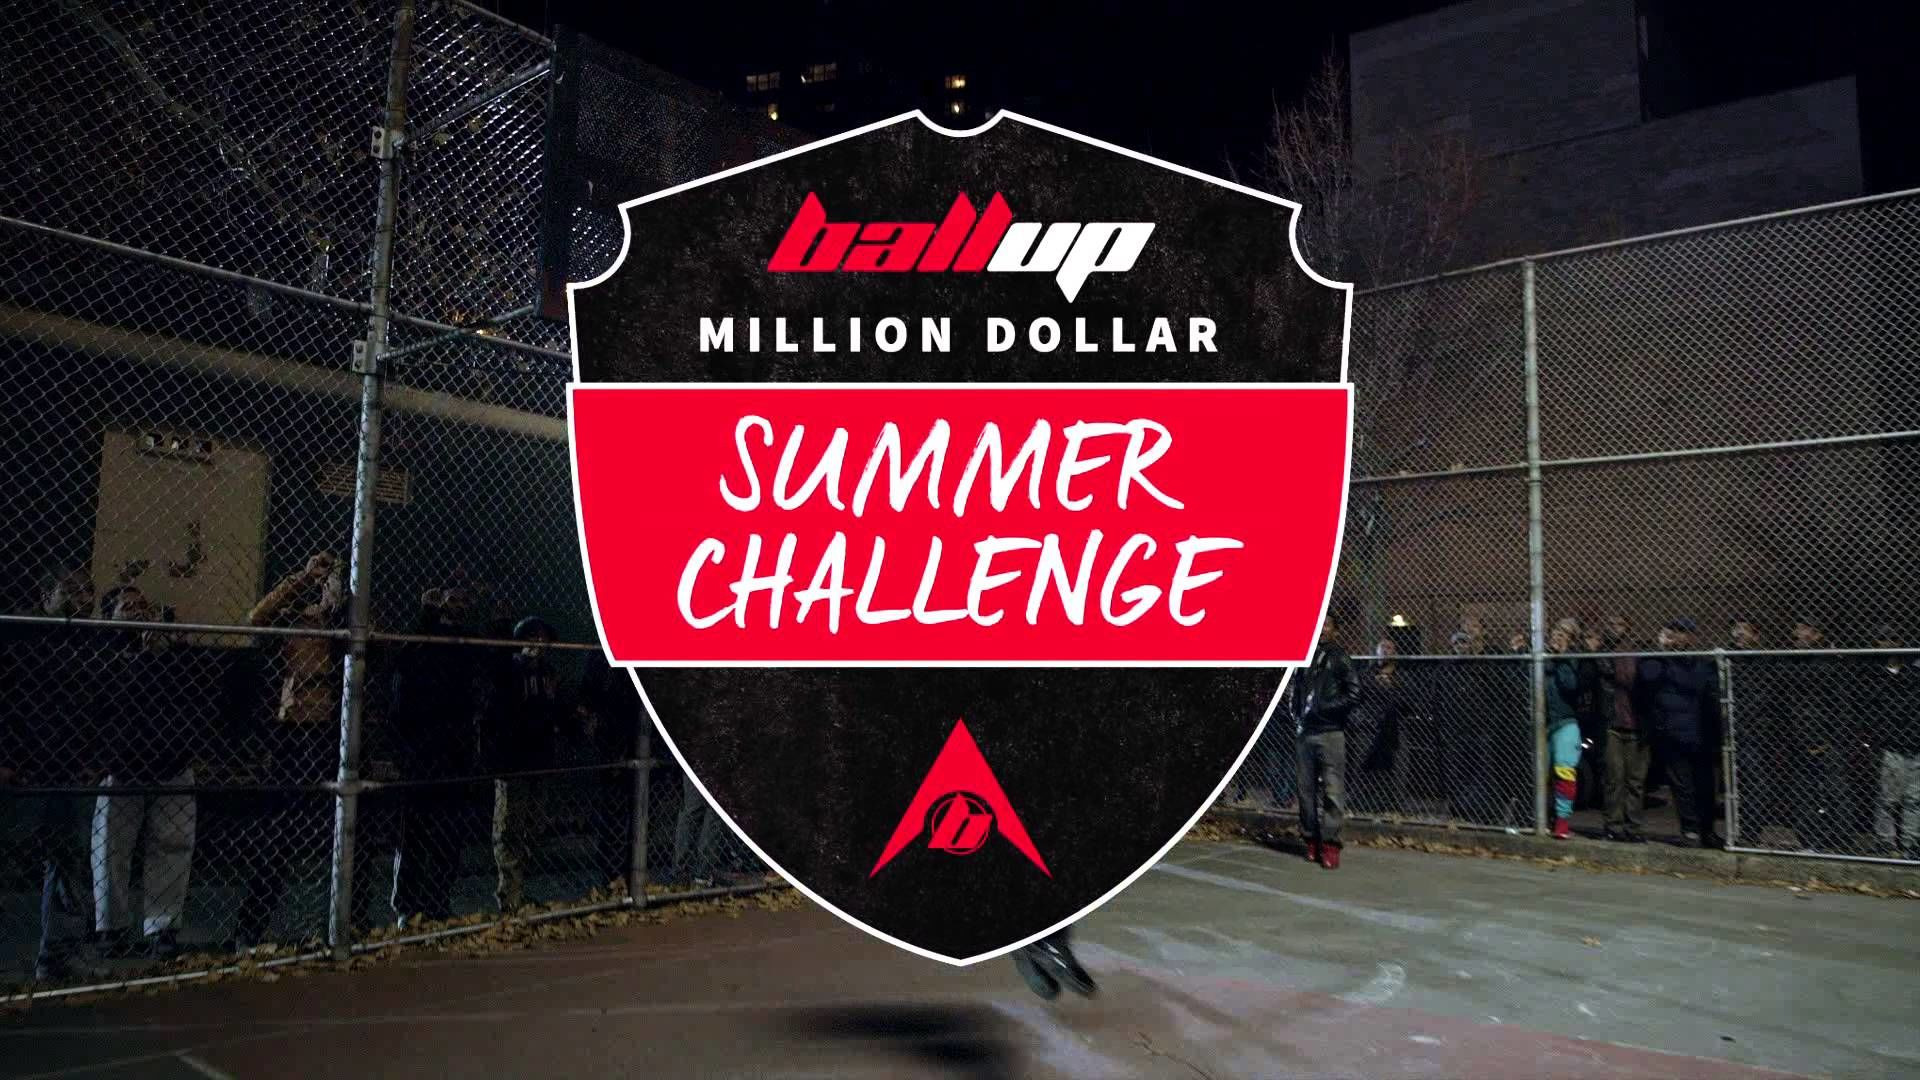 Show Ball Up Million Dollar Summer Challenge